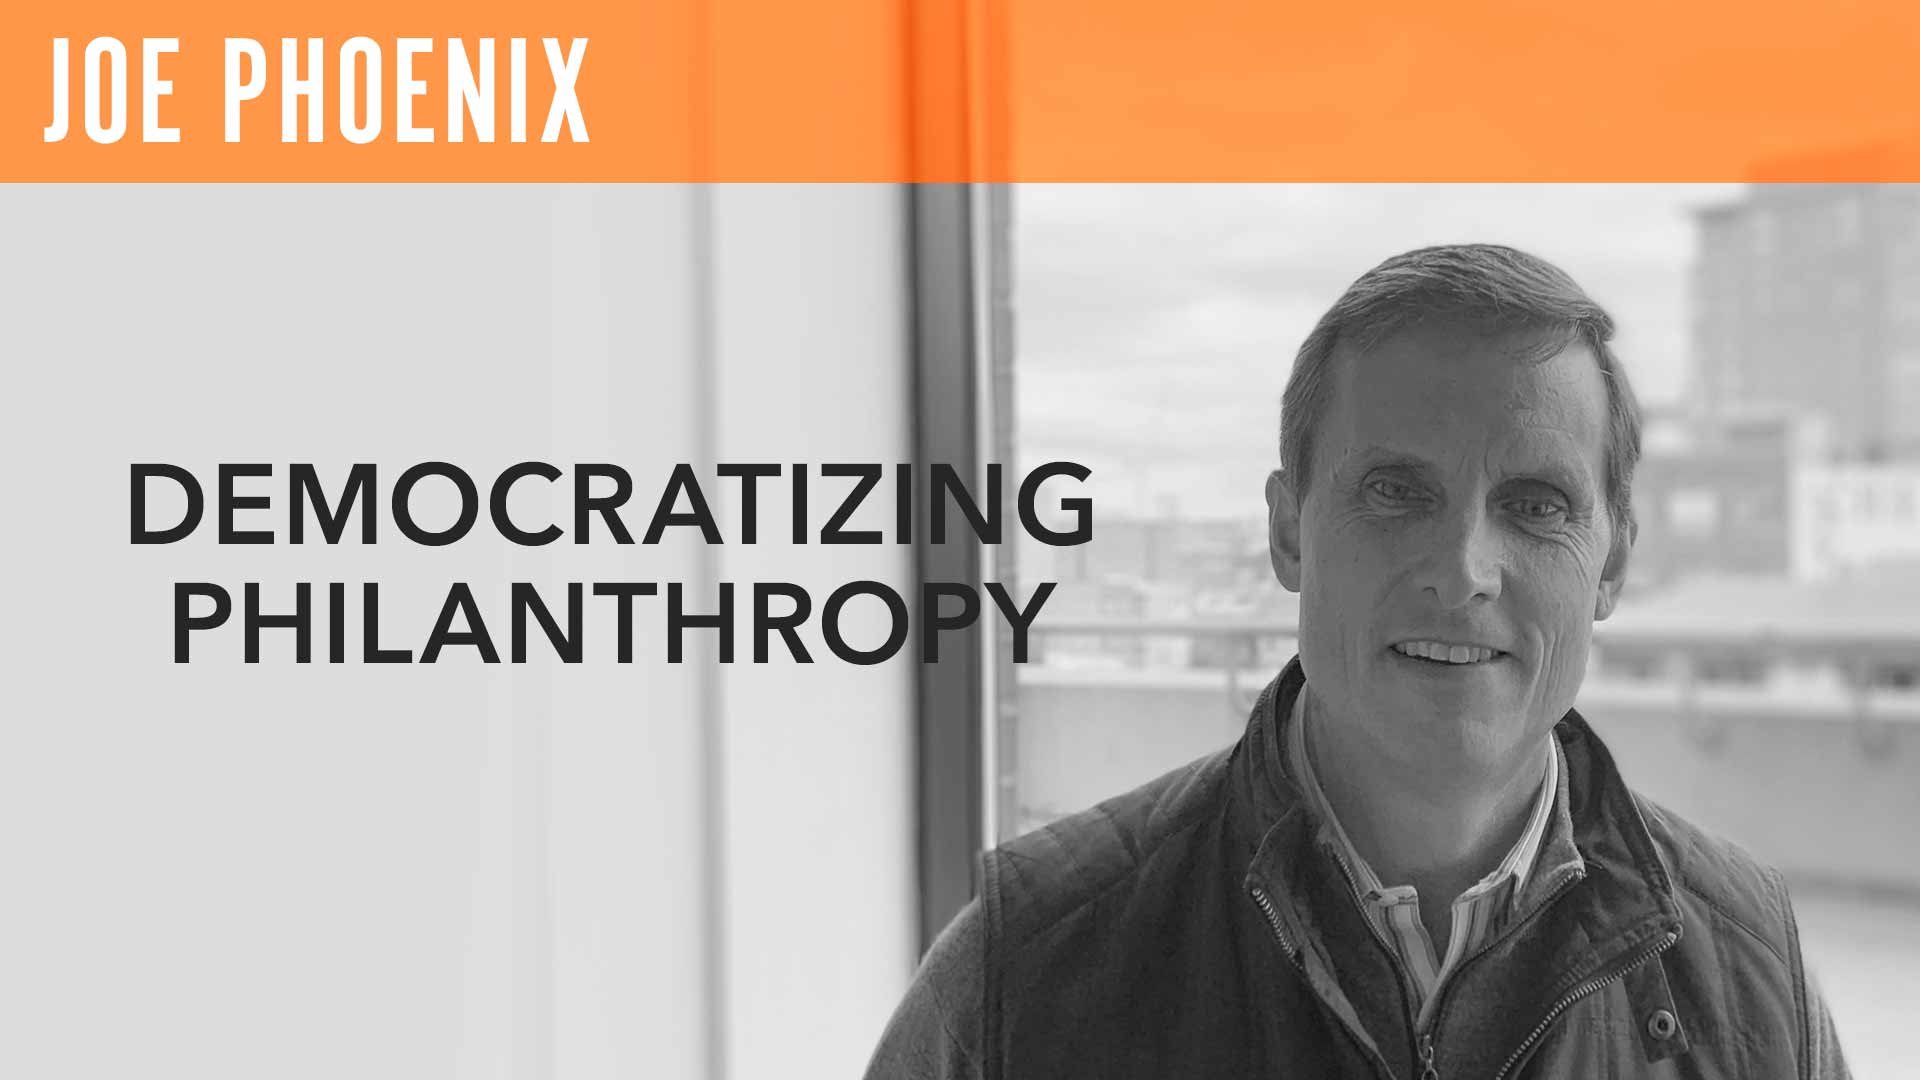 Joe Phoenix, "Democratizing Philanthropy"